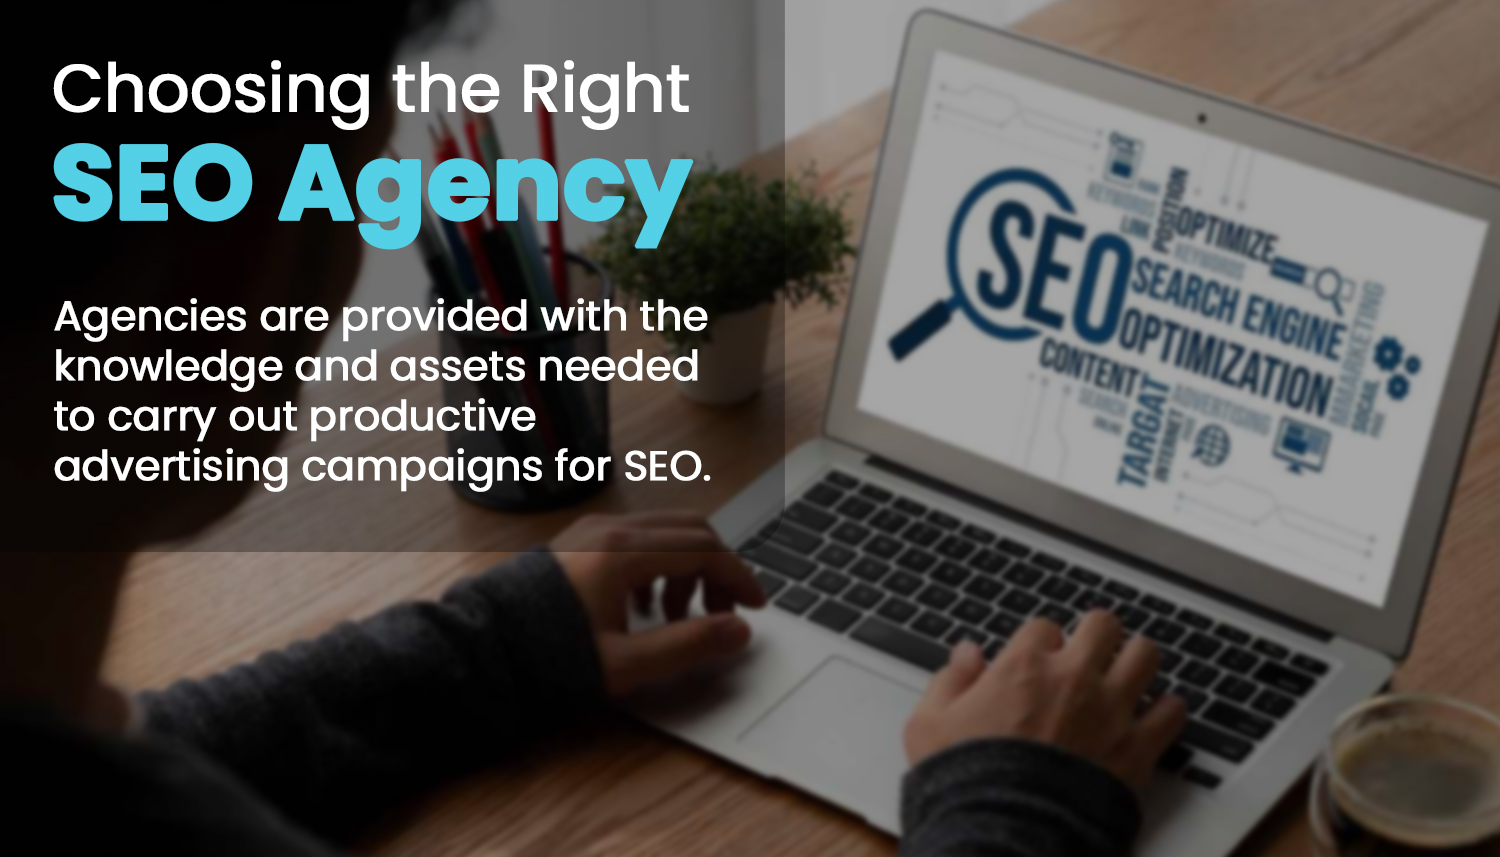 Choosing the right SEO agency